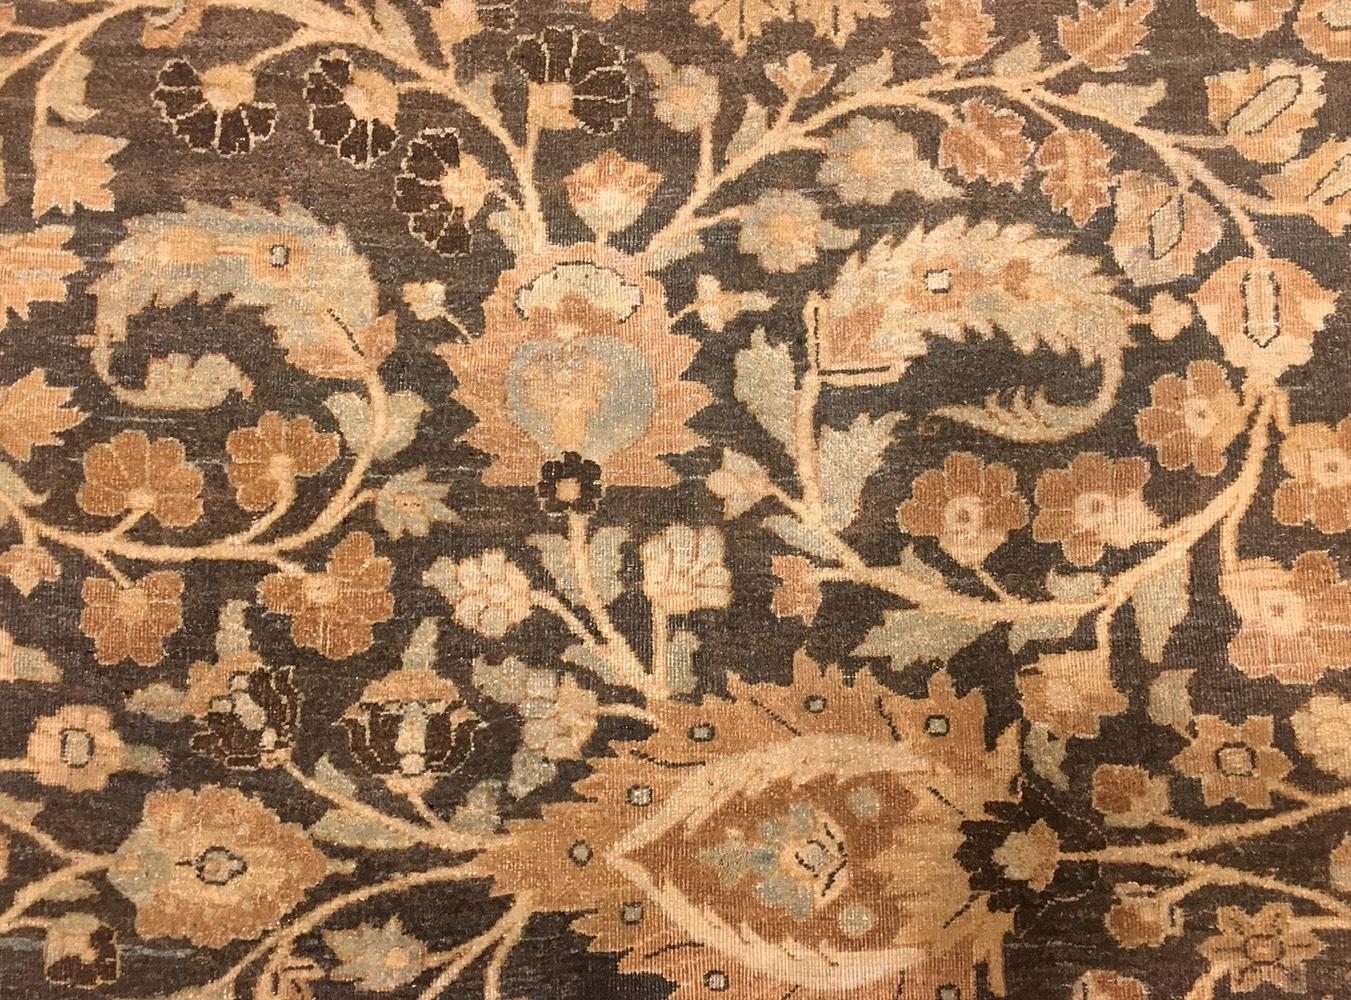 Antique Khorassan Persian Carpet, Persia, circa 1900 - Size: 12 ft x 17 ft 6 in (3.66 m x 5.33 m).